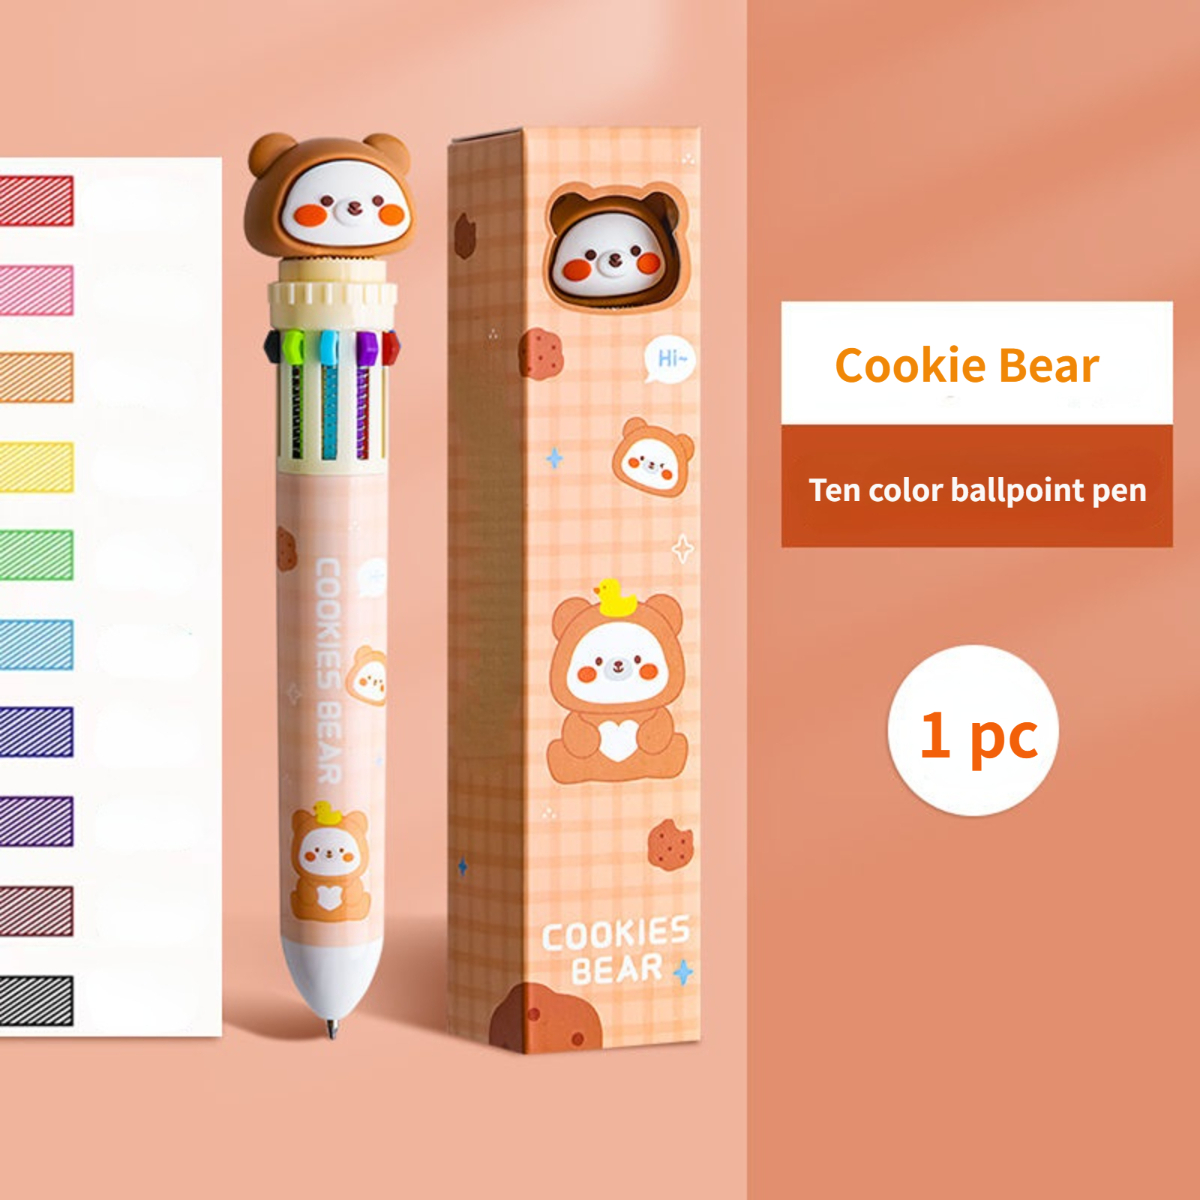 1pc 10colors Cute Bear Ballpoint Pen, Multi-color Ballpoint Pen